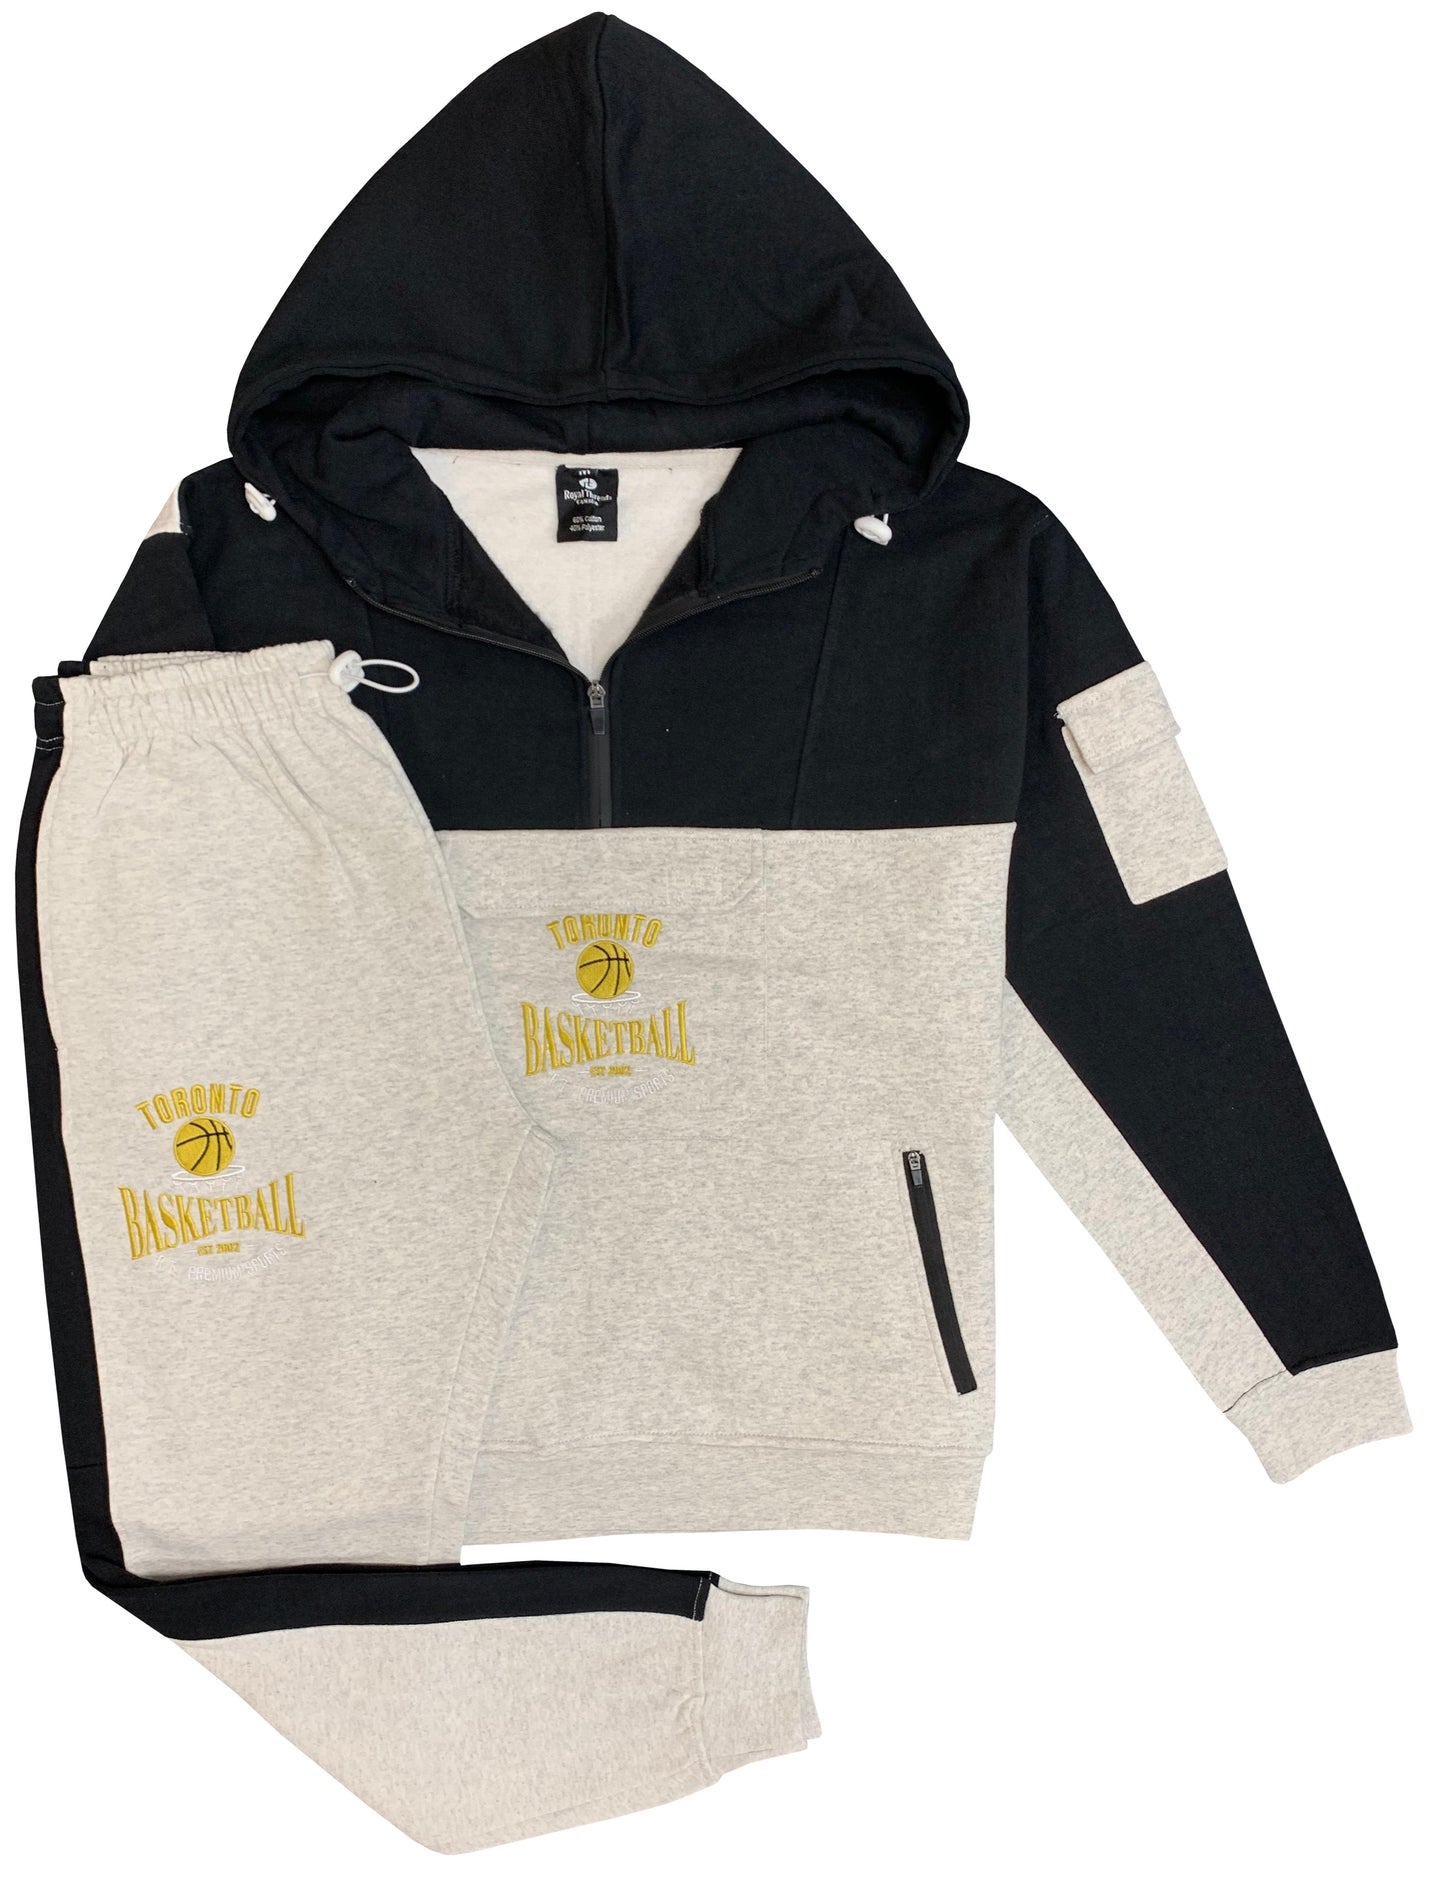 Men’s 2-Piece Sweatsuit Quarter Zip basketball Theme Hoodie and sweatpants Heavy Duty Winter Fleece Outfit